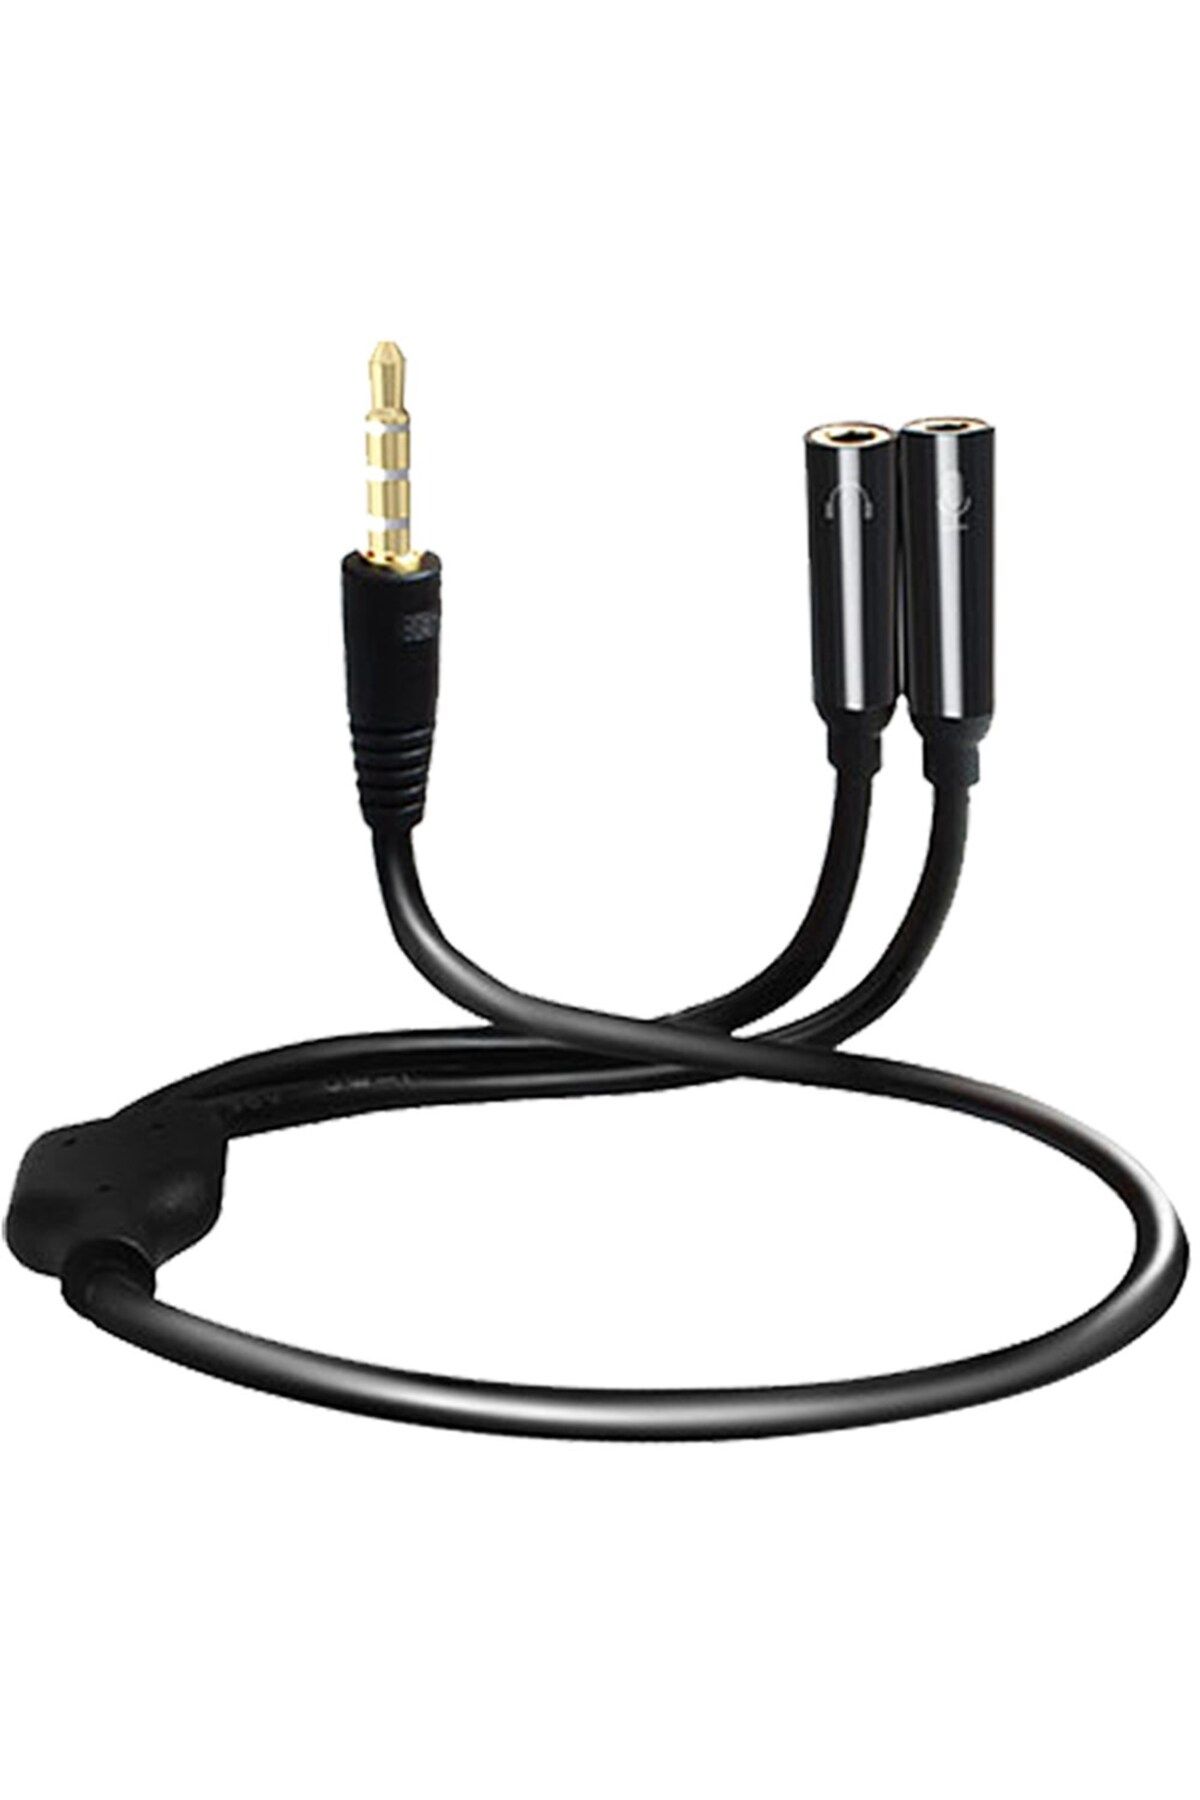 S-Link Sl-302ms 3.5 Mm Stereo Kulaklık Hoparlör Çoklayıcı Kablo